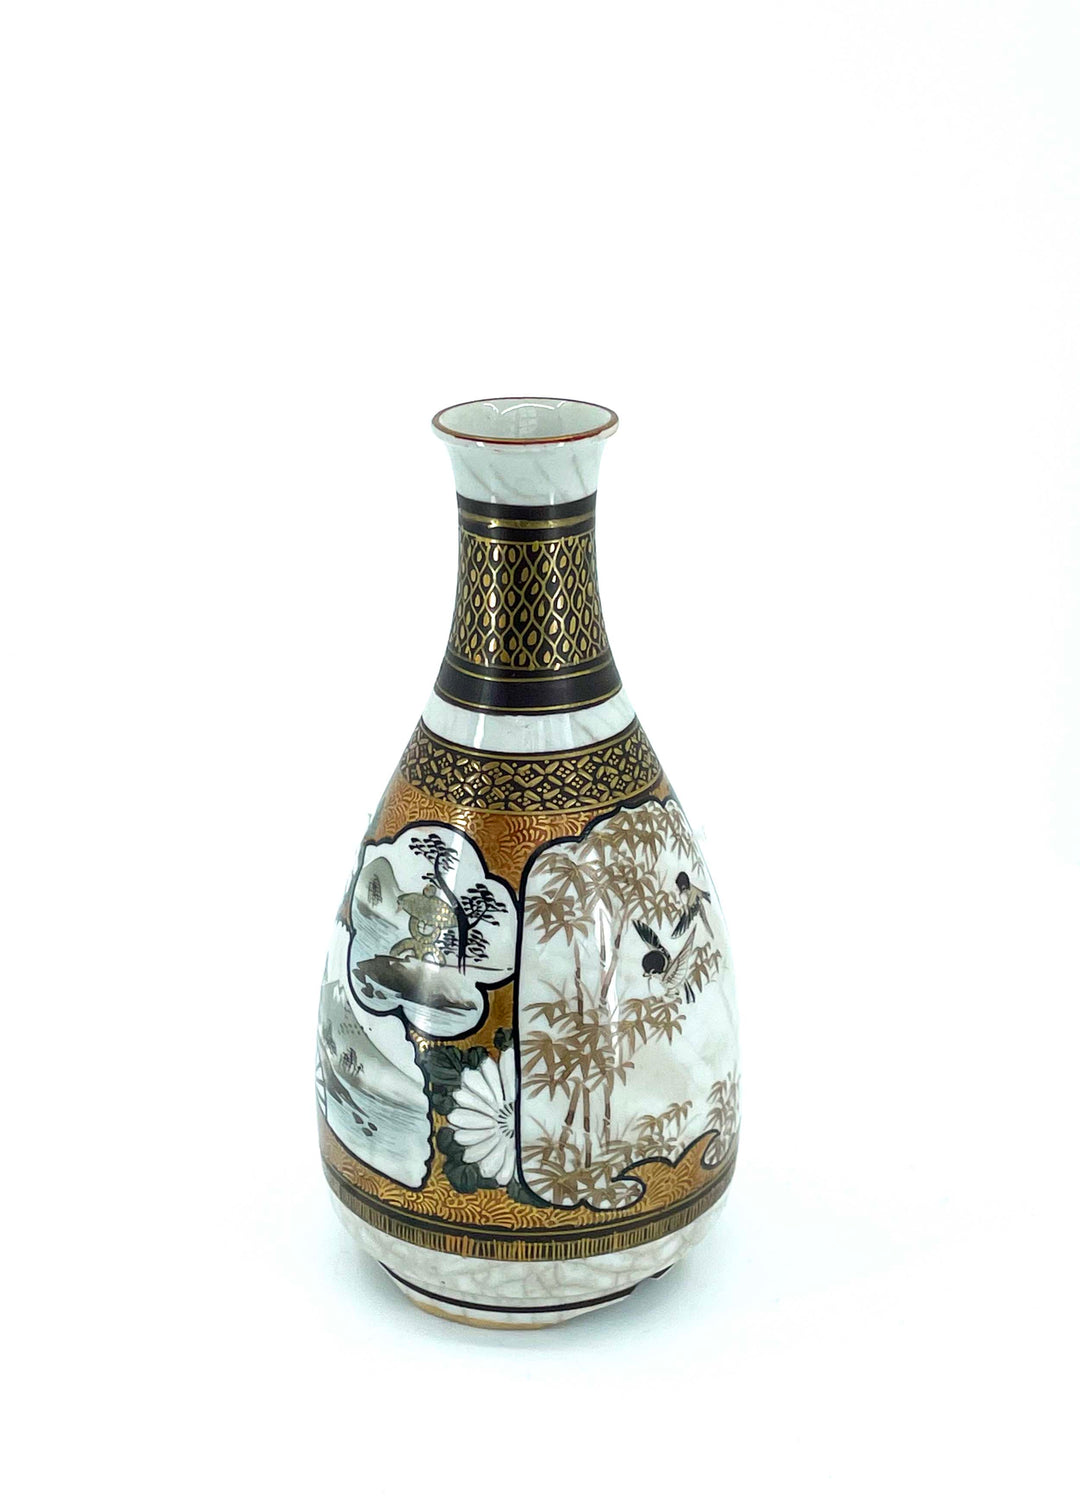 Kutani-ware porcelain tokkuri with fine scenic detail, vintage